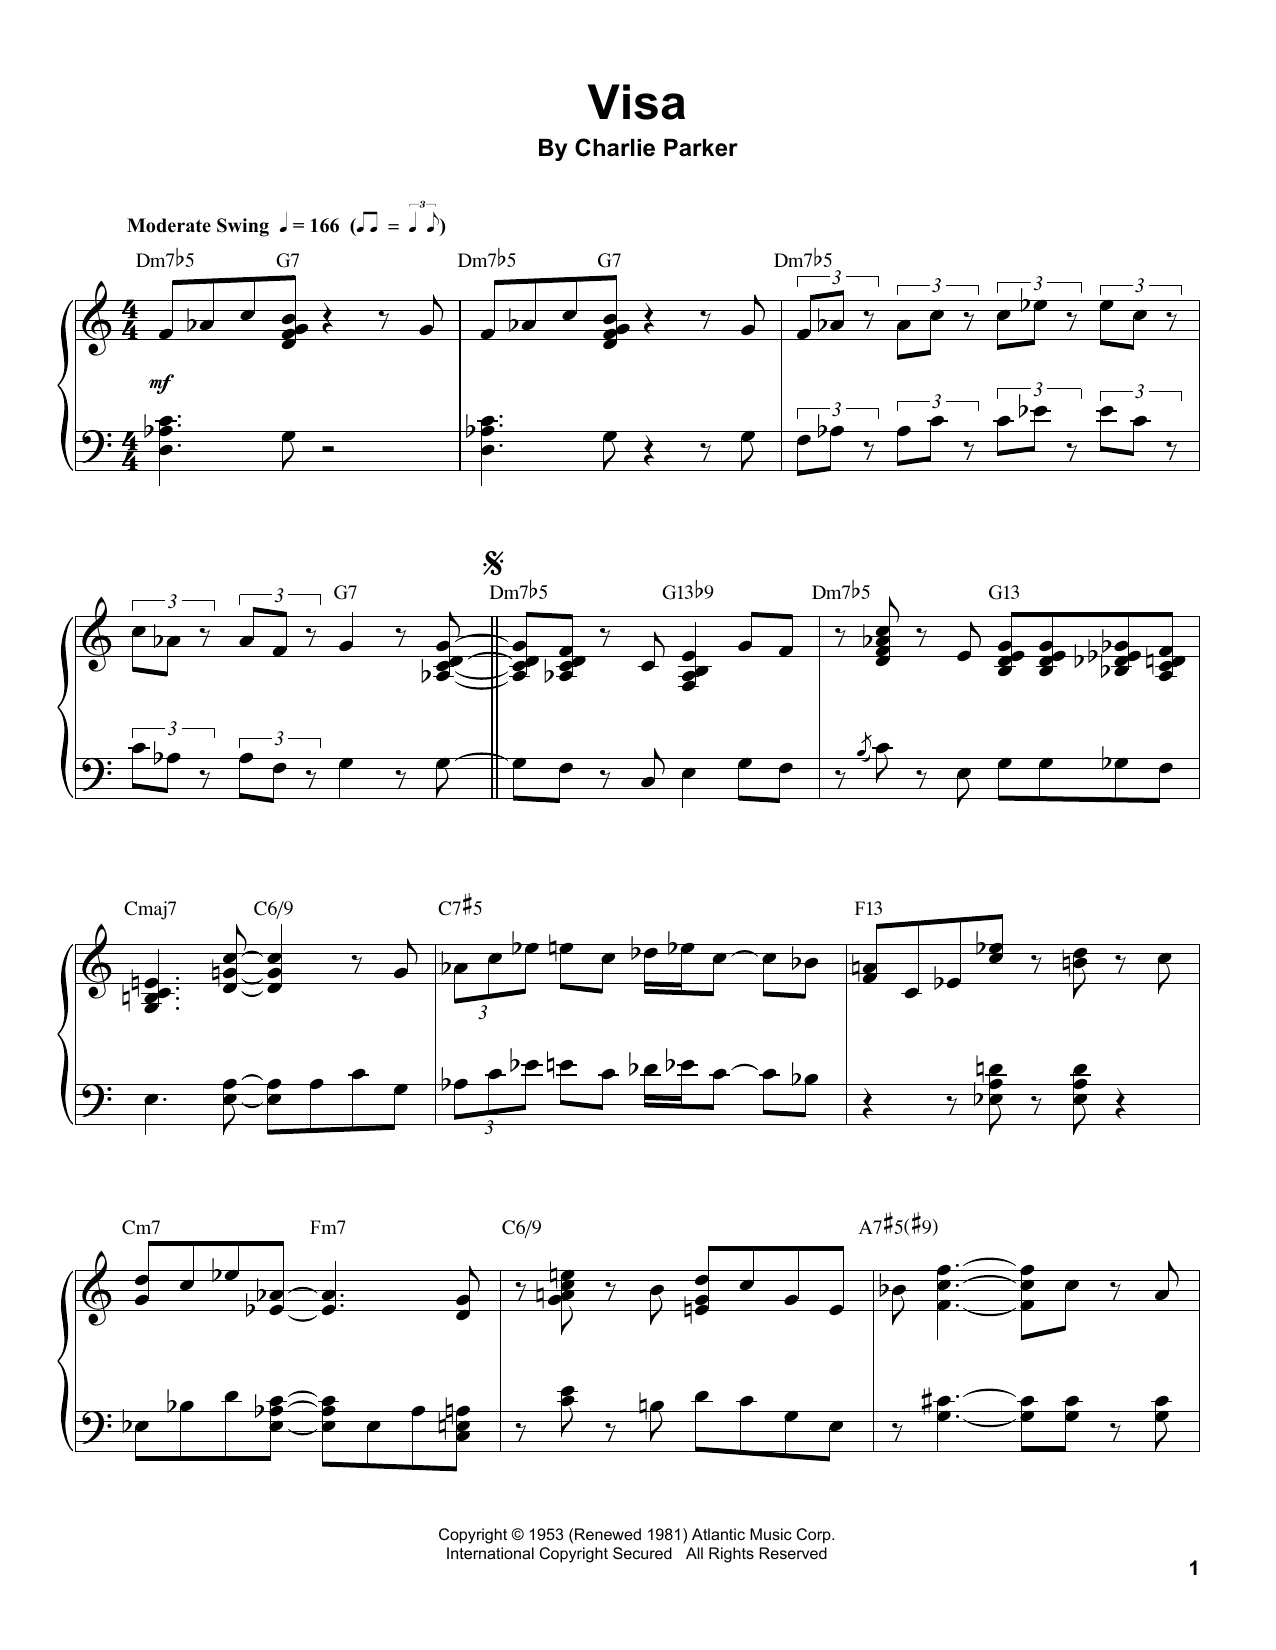 Charlie Parker Visa Sheet Music Notes & Chords for Piano Transcription - Download or Print PDF